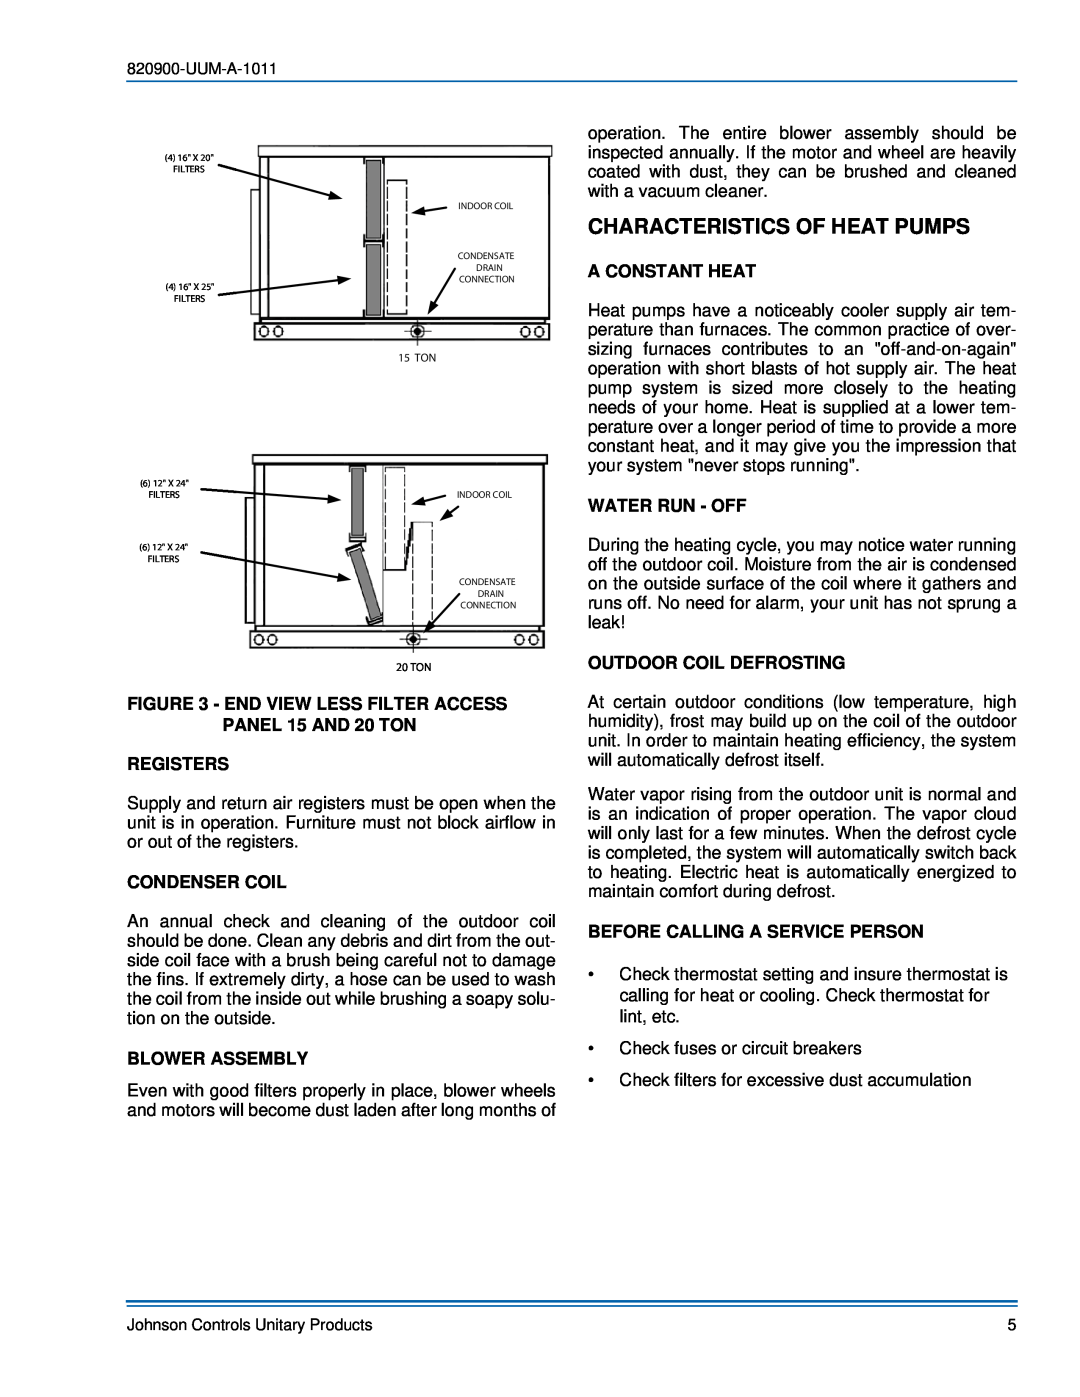 Johnson Controls 820900-UUM-A-1011 manual Characteristics Of Heat Pumps, End View Less Filter Access, Condenser Coil 